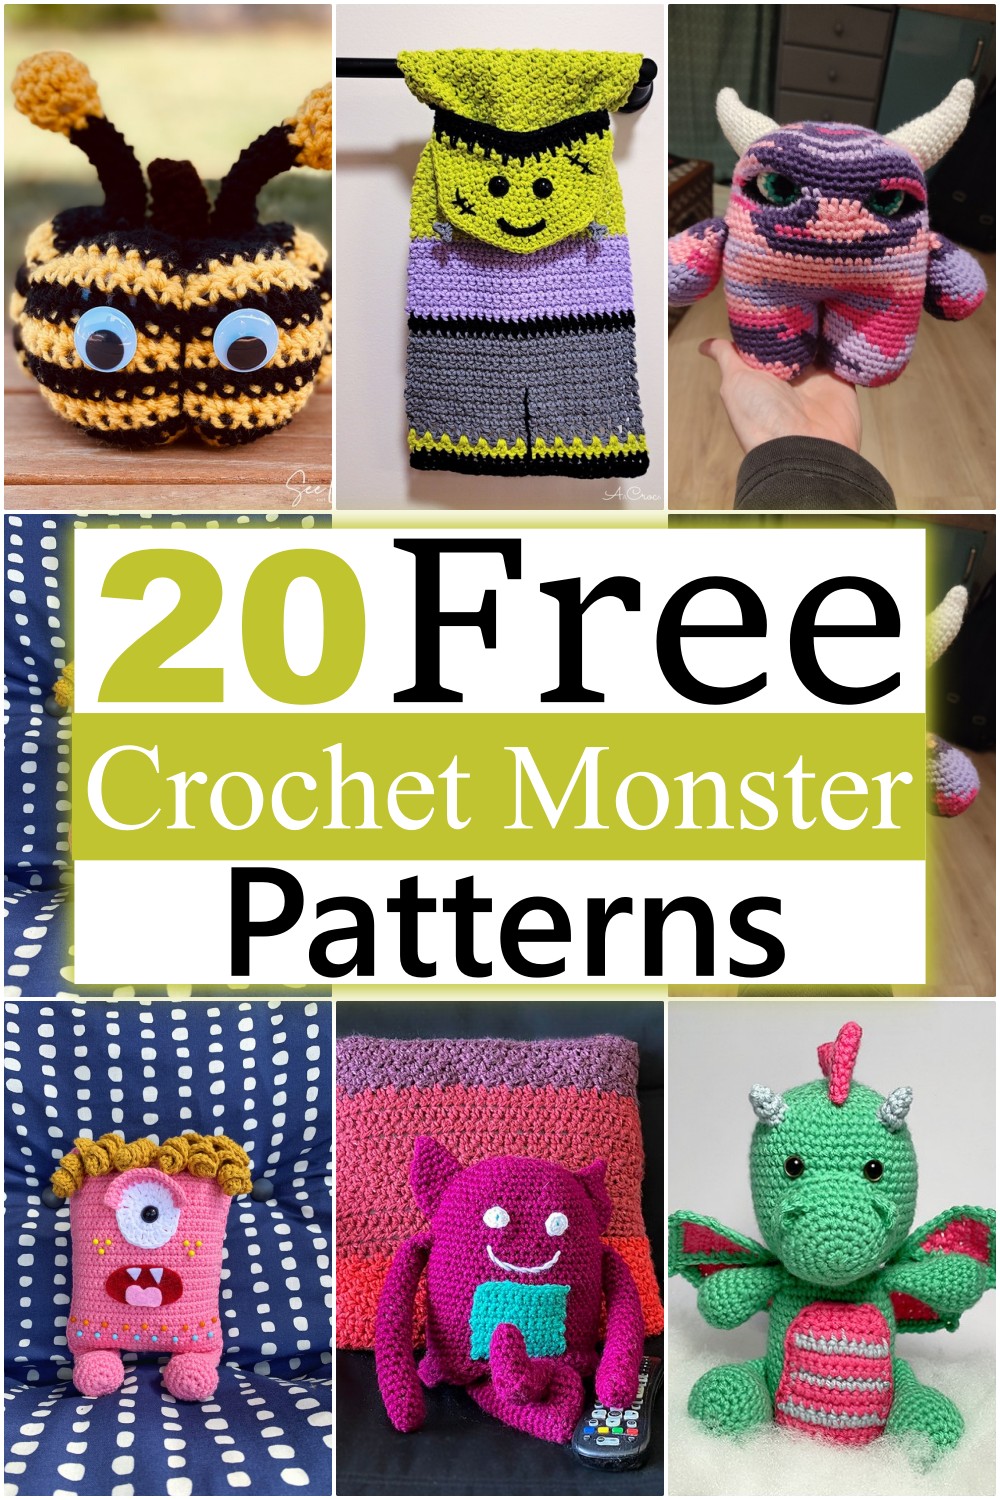 Free Crochet Monster Patterns